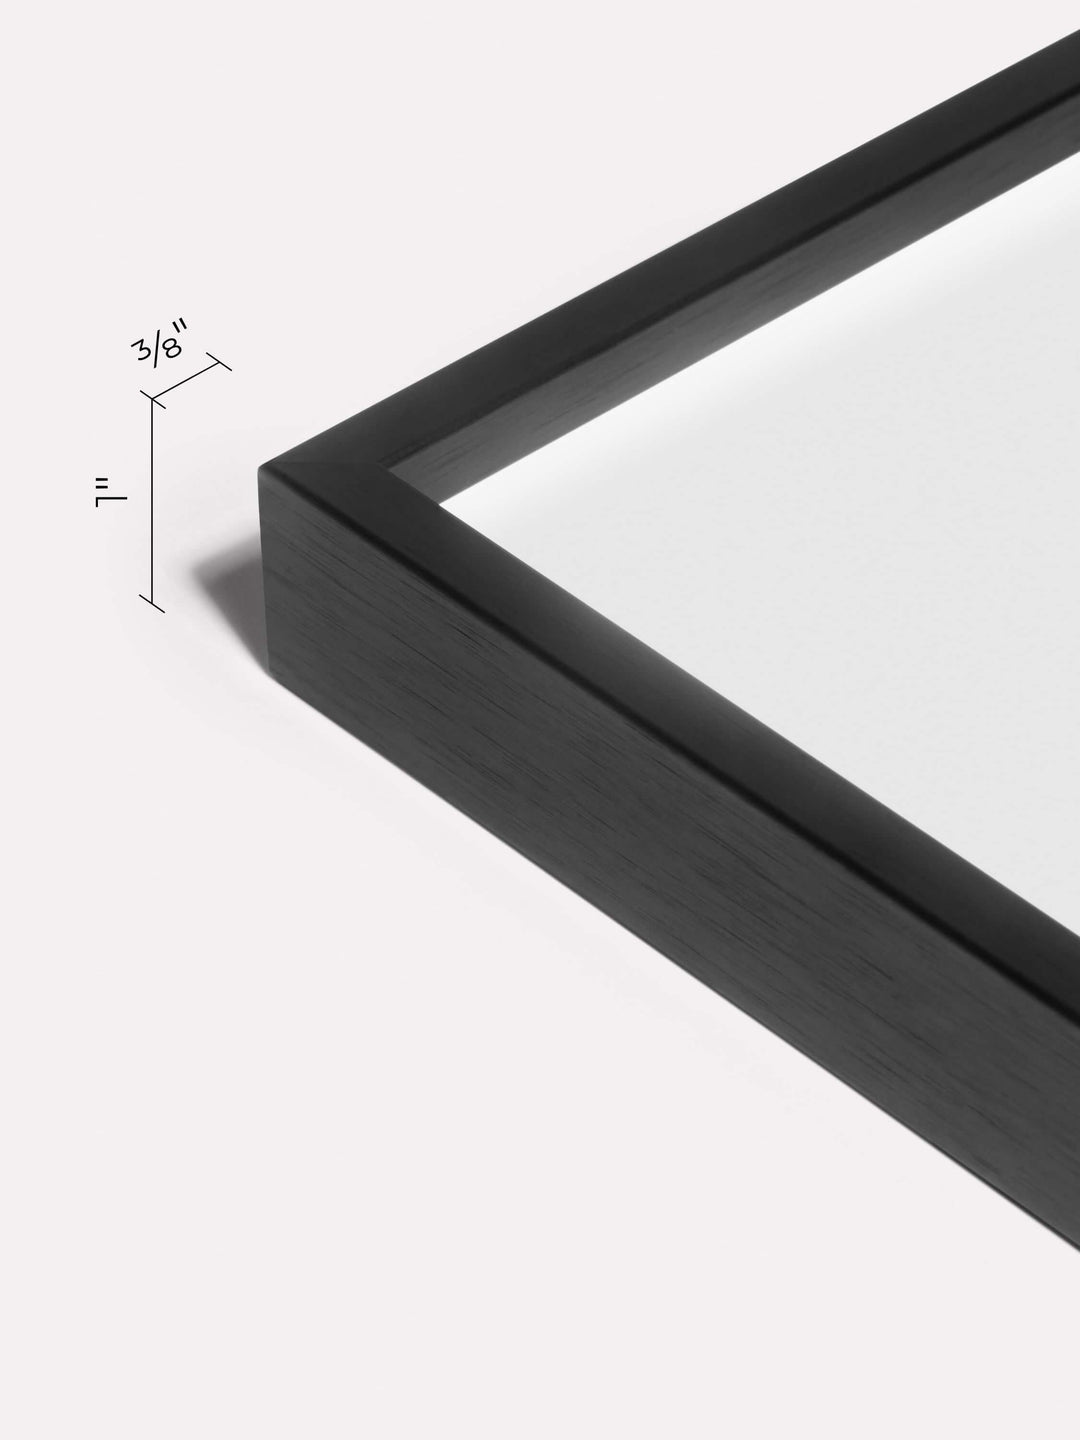 16x24-inch Thin Frame, Black - Close-up view